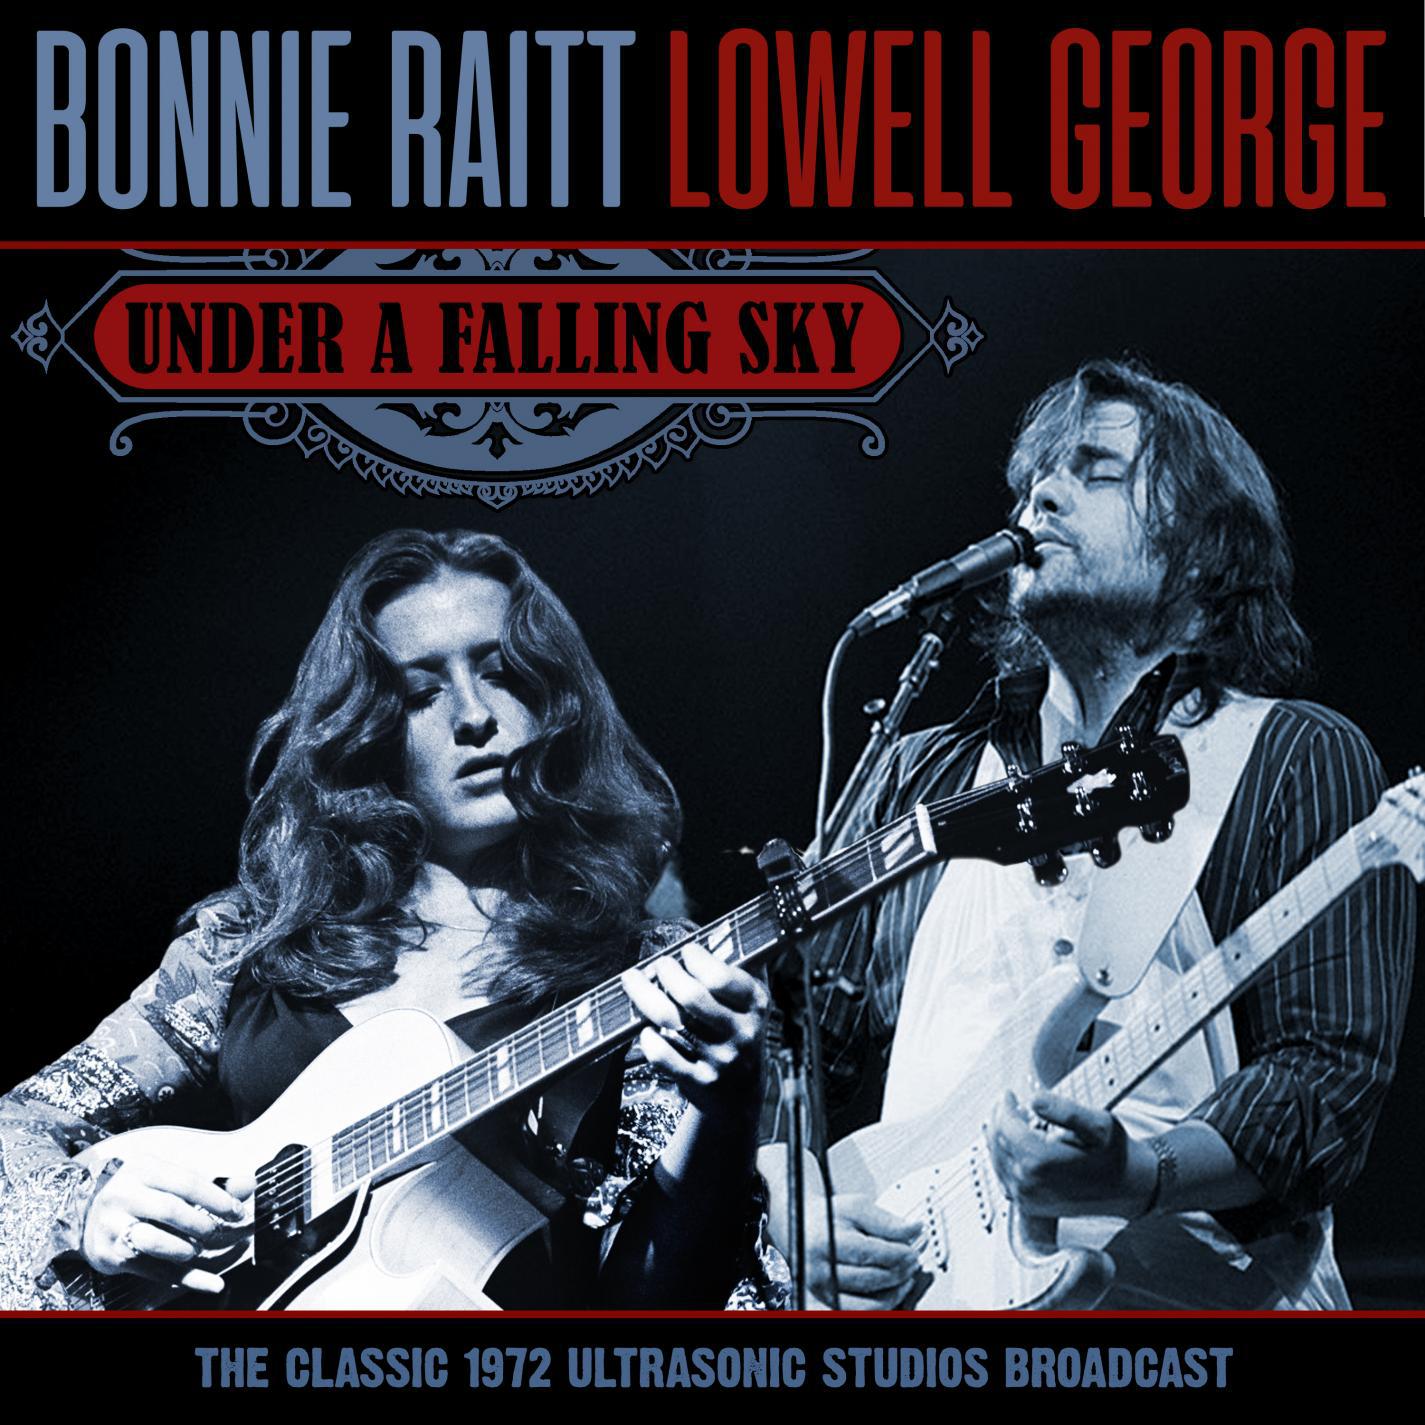 Bonnie Raitt - As The Years Go Passing By (Live 1972)